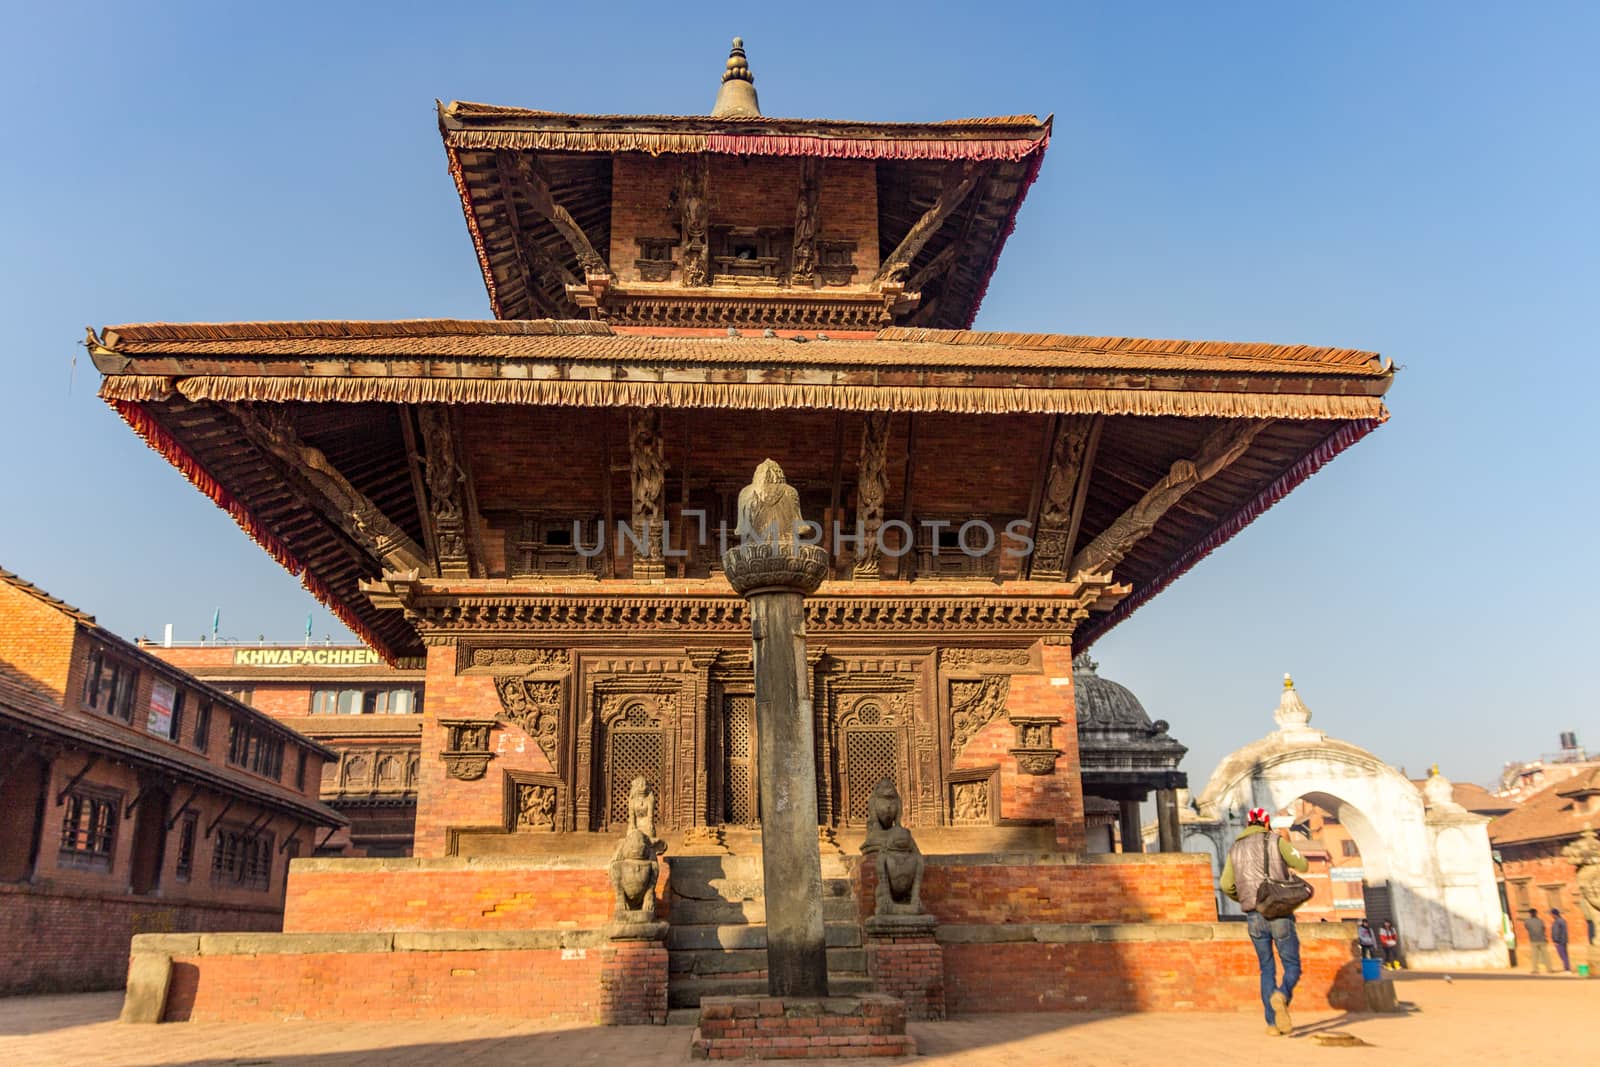 Kathmandu, Nepal - CIRCA 2020:Nepal Kathmandu Royal Patan palace complex in Patan Durbar Square famous place tourist attraction. Bhaktapur is UNESCO World Heritage site located in the Kathmandu Valley